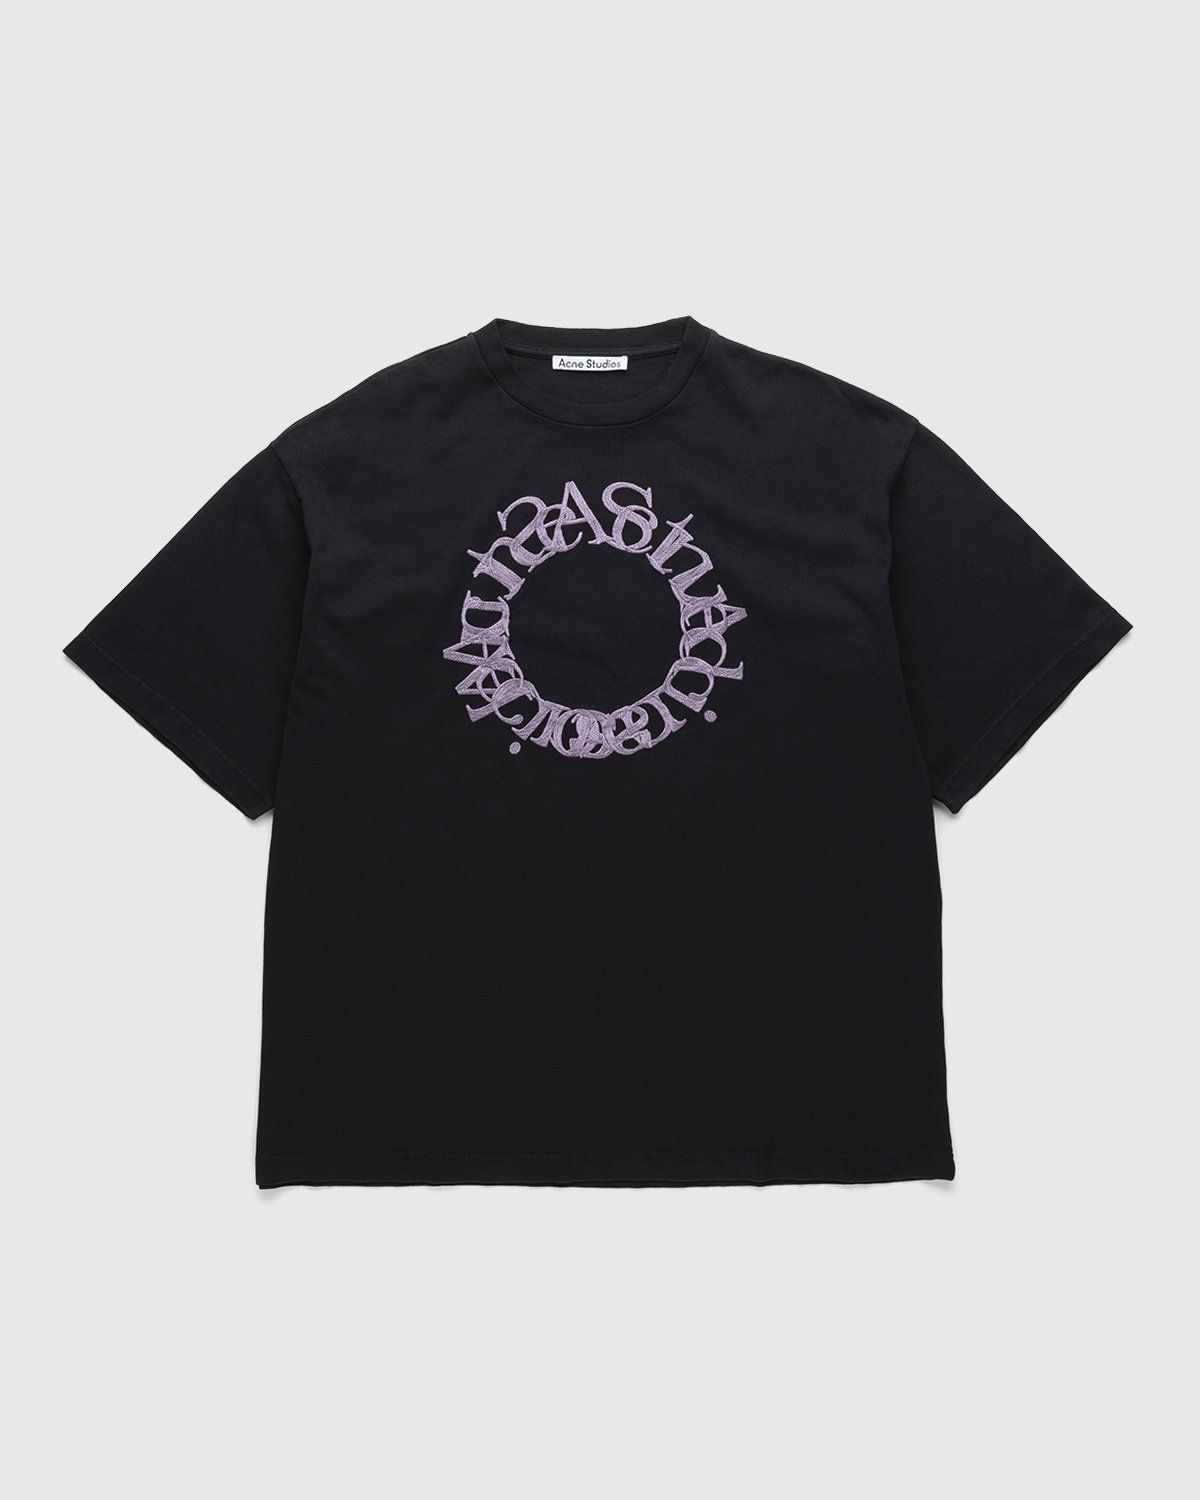 Acne Studios – Cotton Logo T-Shirt Black - Image 1